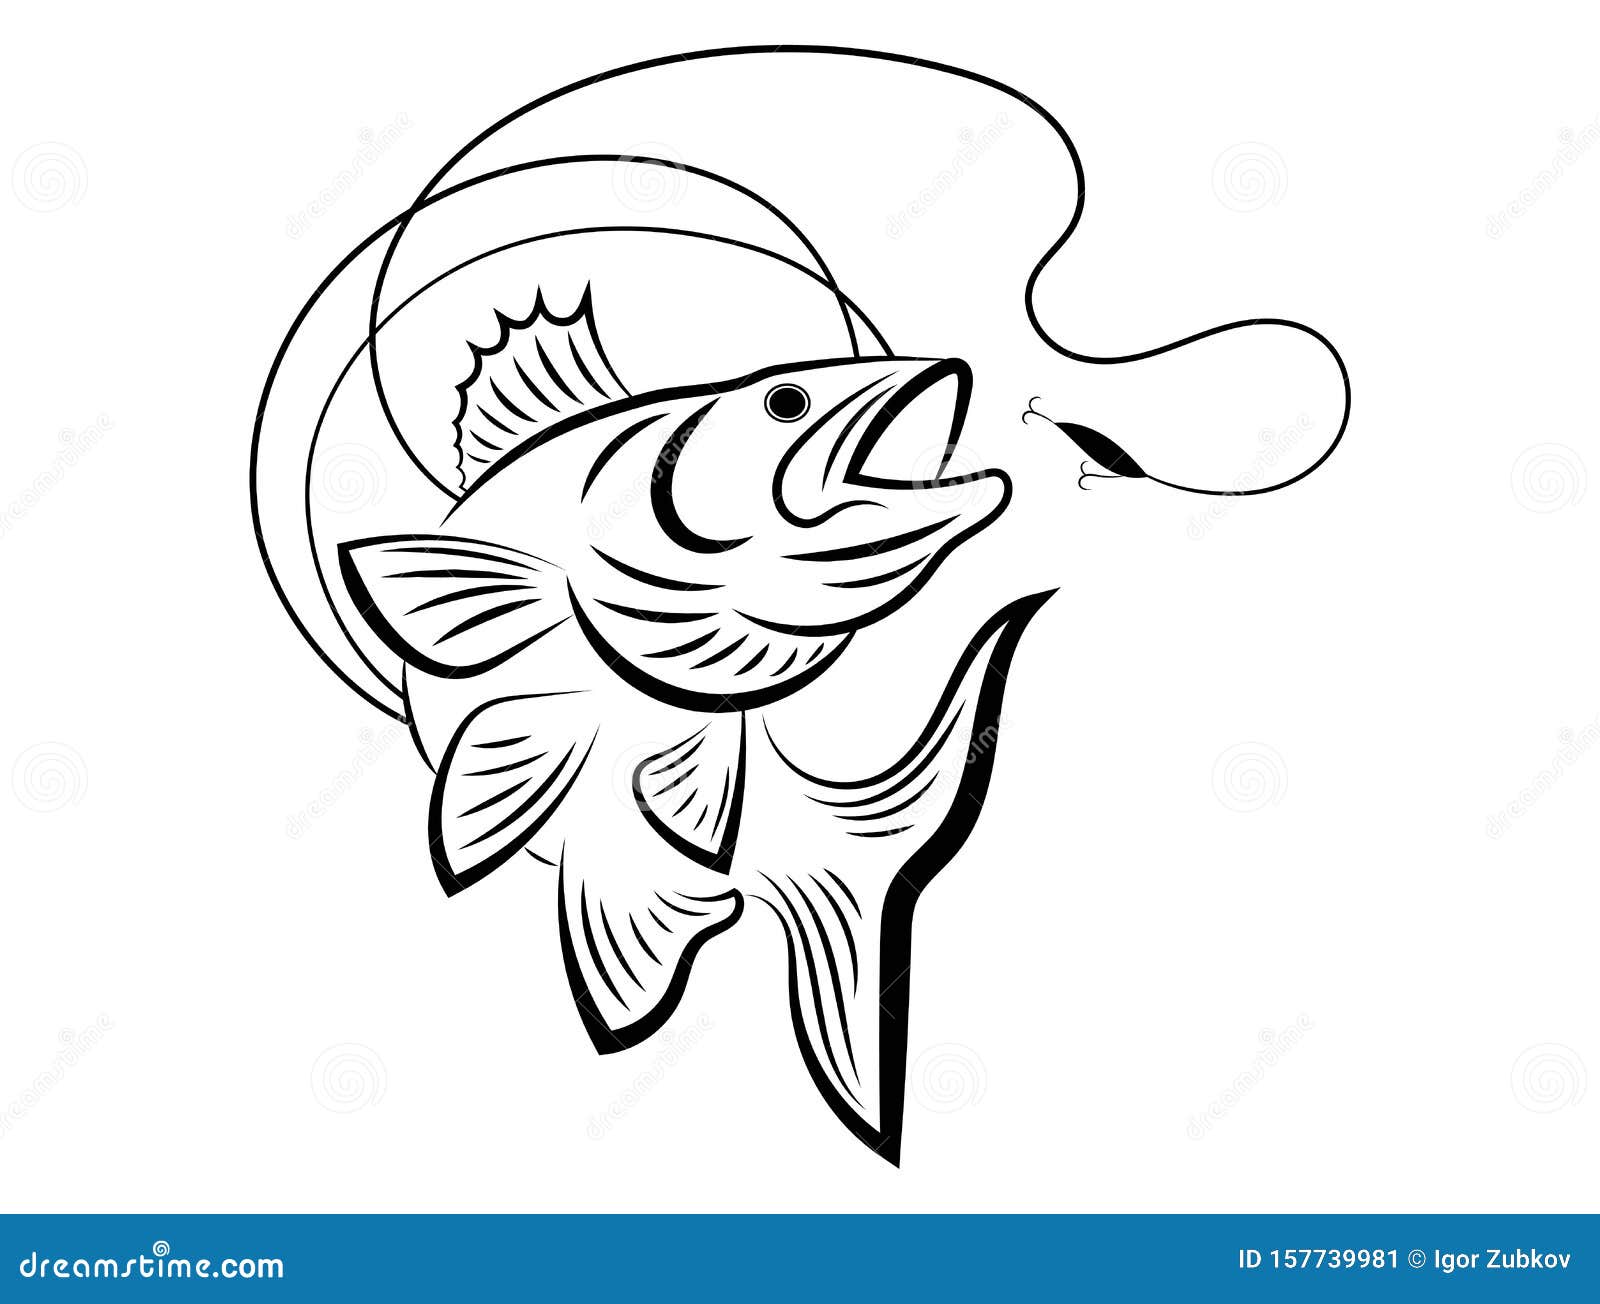 https://thumbs.dreamstime.com/z/fishing-logo-black-white-illustration-fish-hunting-bait-predatory-fish-hook-fishing-rod-fishing-logo-157739981.jpg